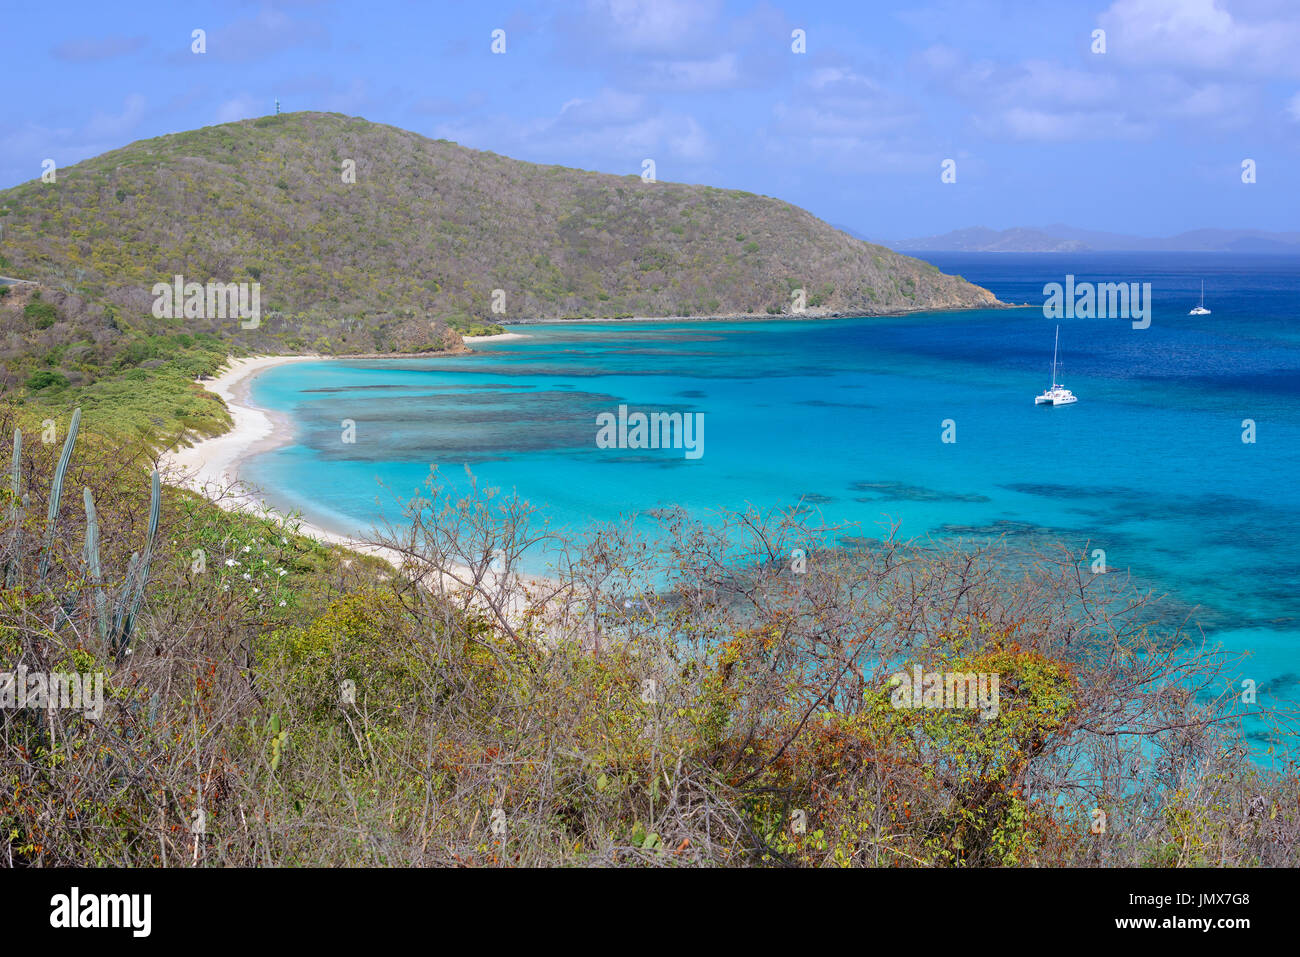 Sandy Beach of Savannah Bay with vegetation on hill, Savannah Bay, British Virgin Islands, Caribbean Sea Stock Photo